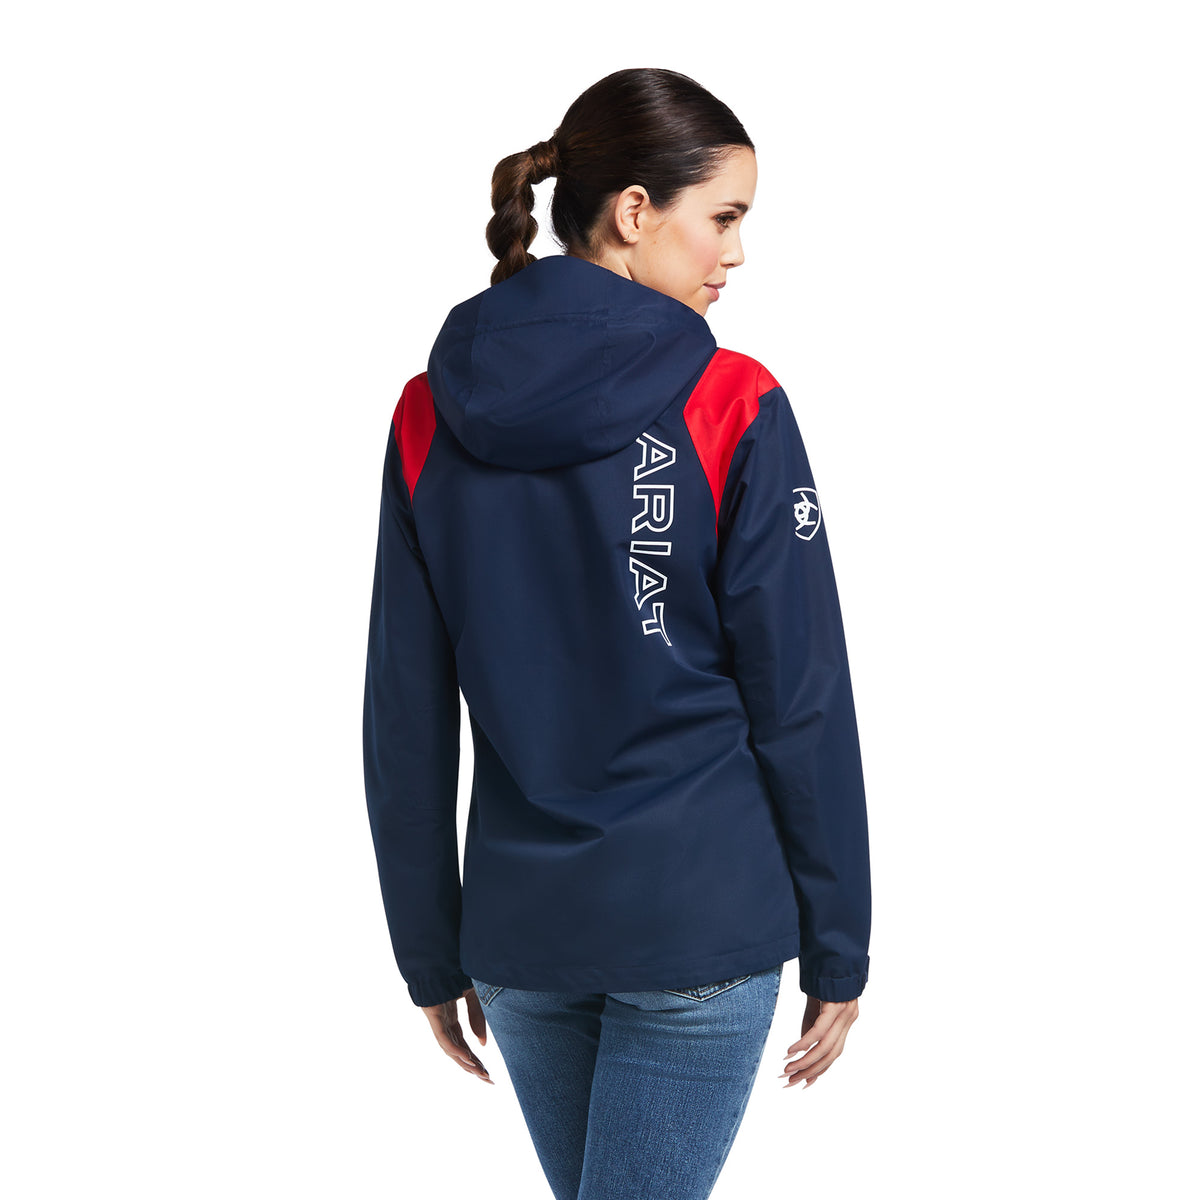 Ariat Womens Spectator Waterproof Jacket - Team